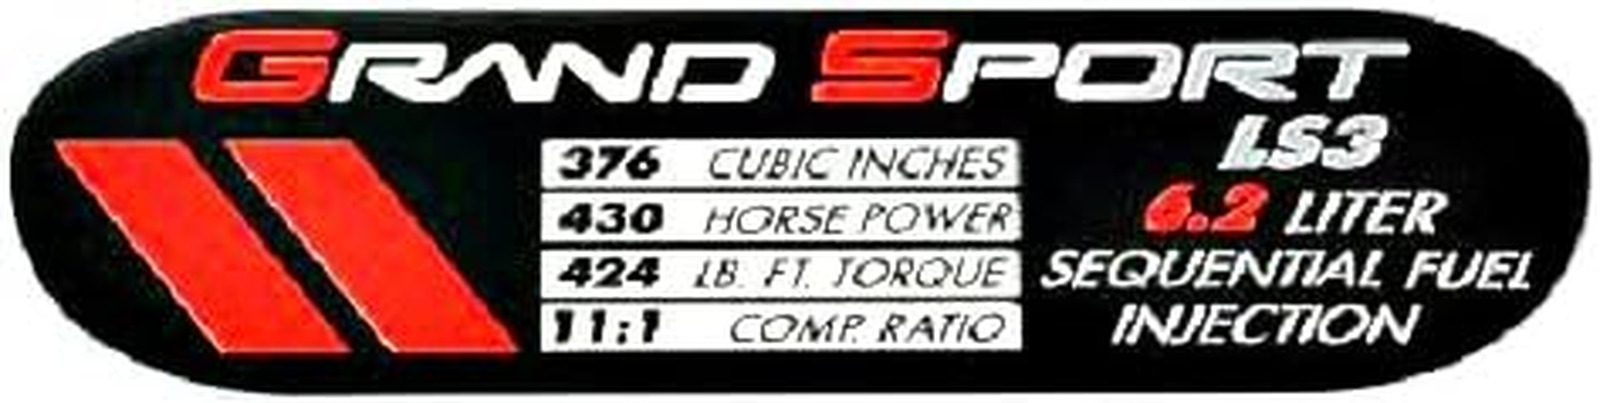 C6 GS Corvette Spec Data ID Metal Plate Emblem LS3 430HP 10-13 Grand Sport